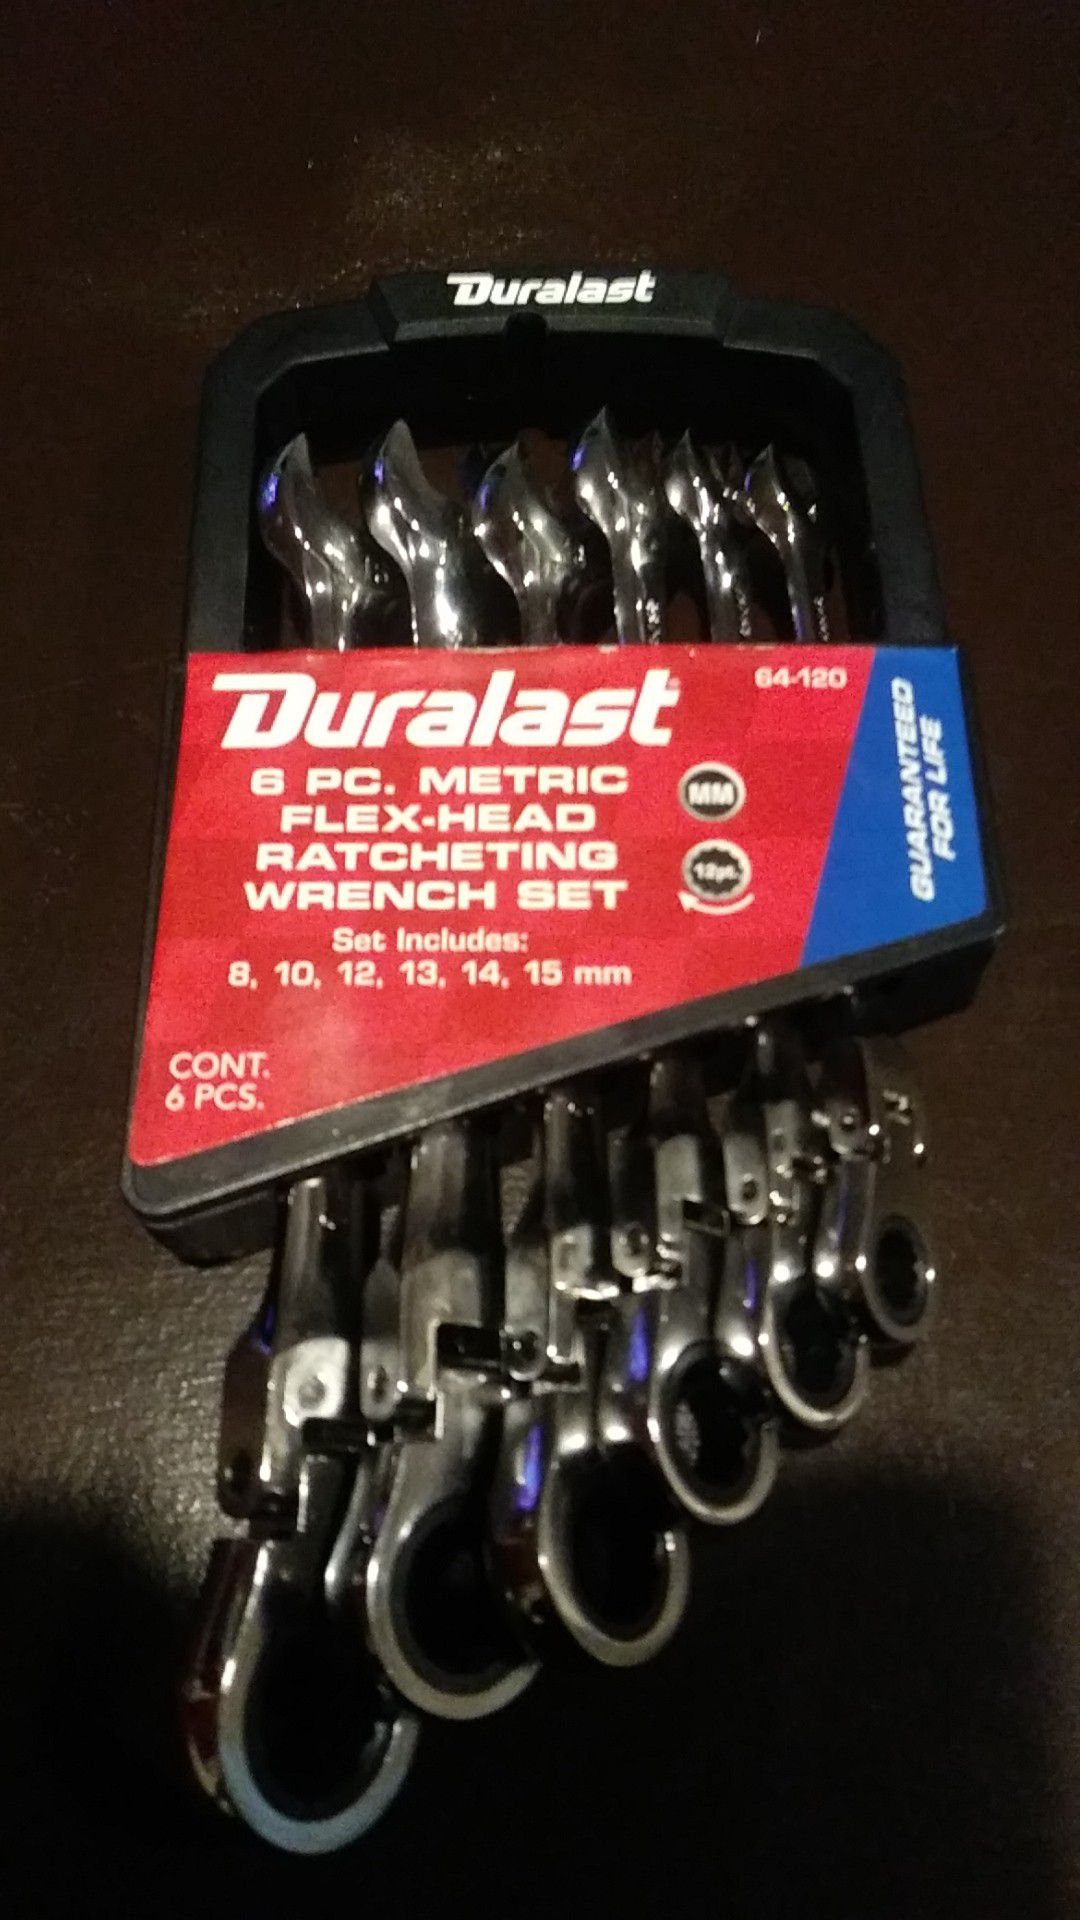 Duralast, 6 piece metric flex-head ratcheting wrench set